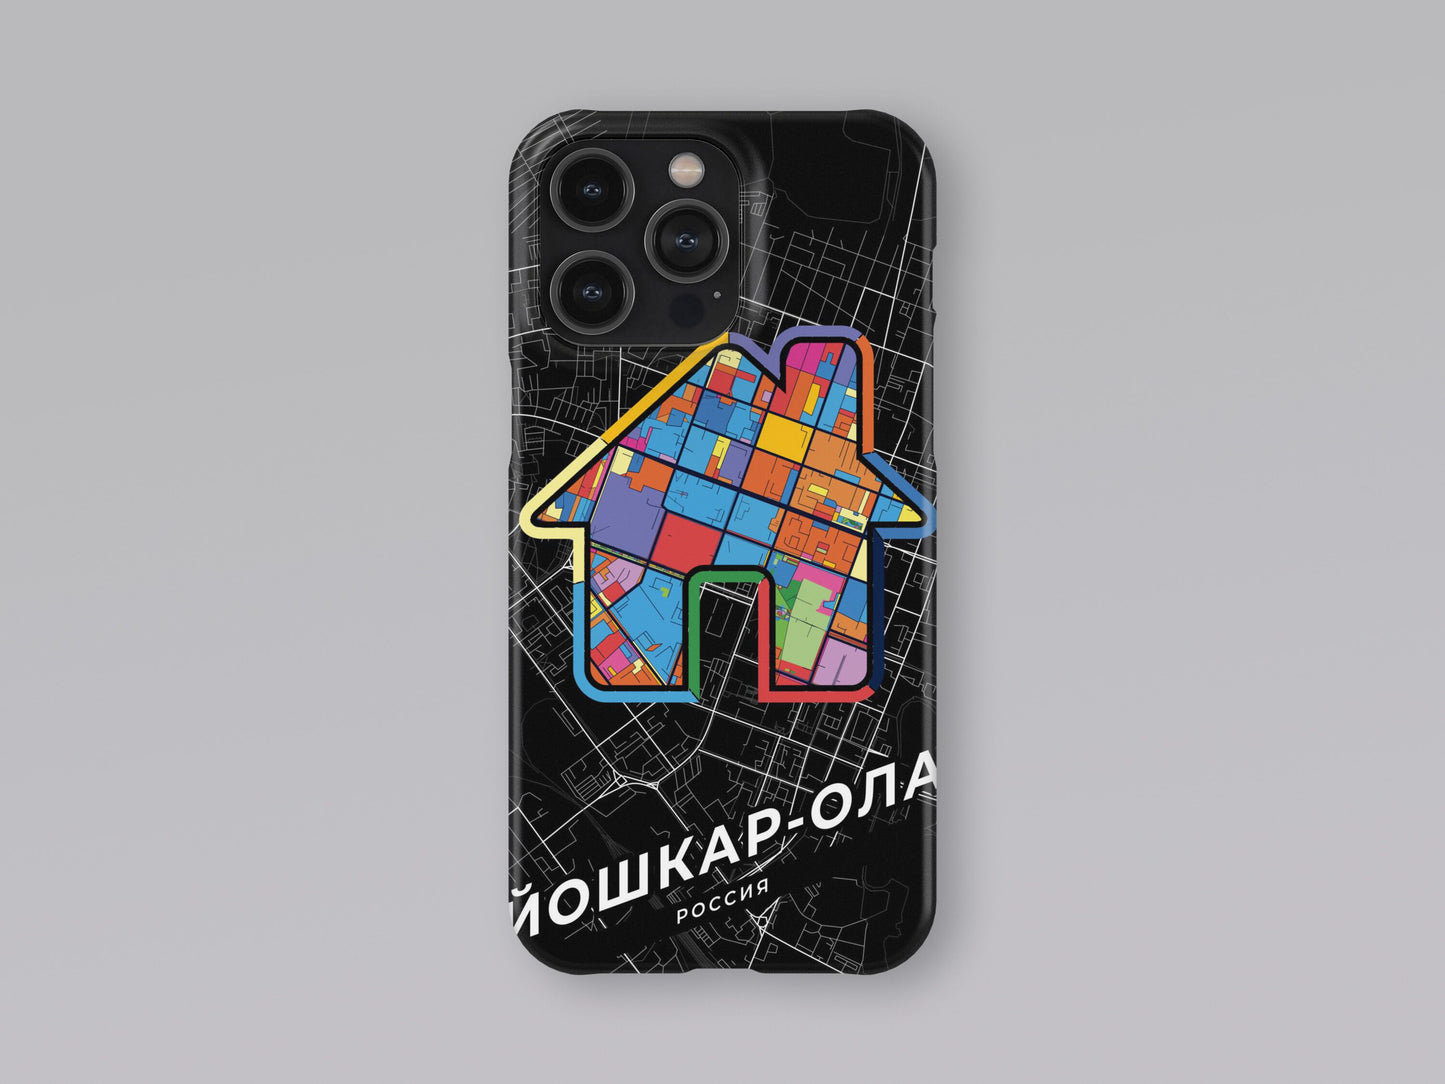 Yoshkar-Ola Russia slim phone case with colorful icon 3